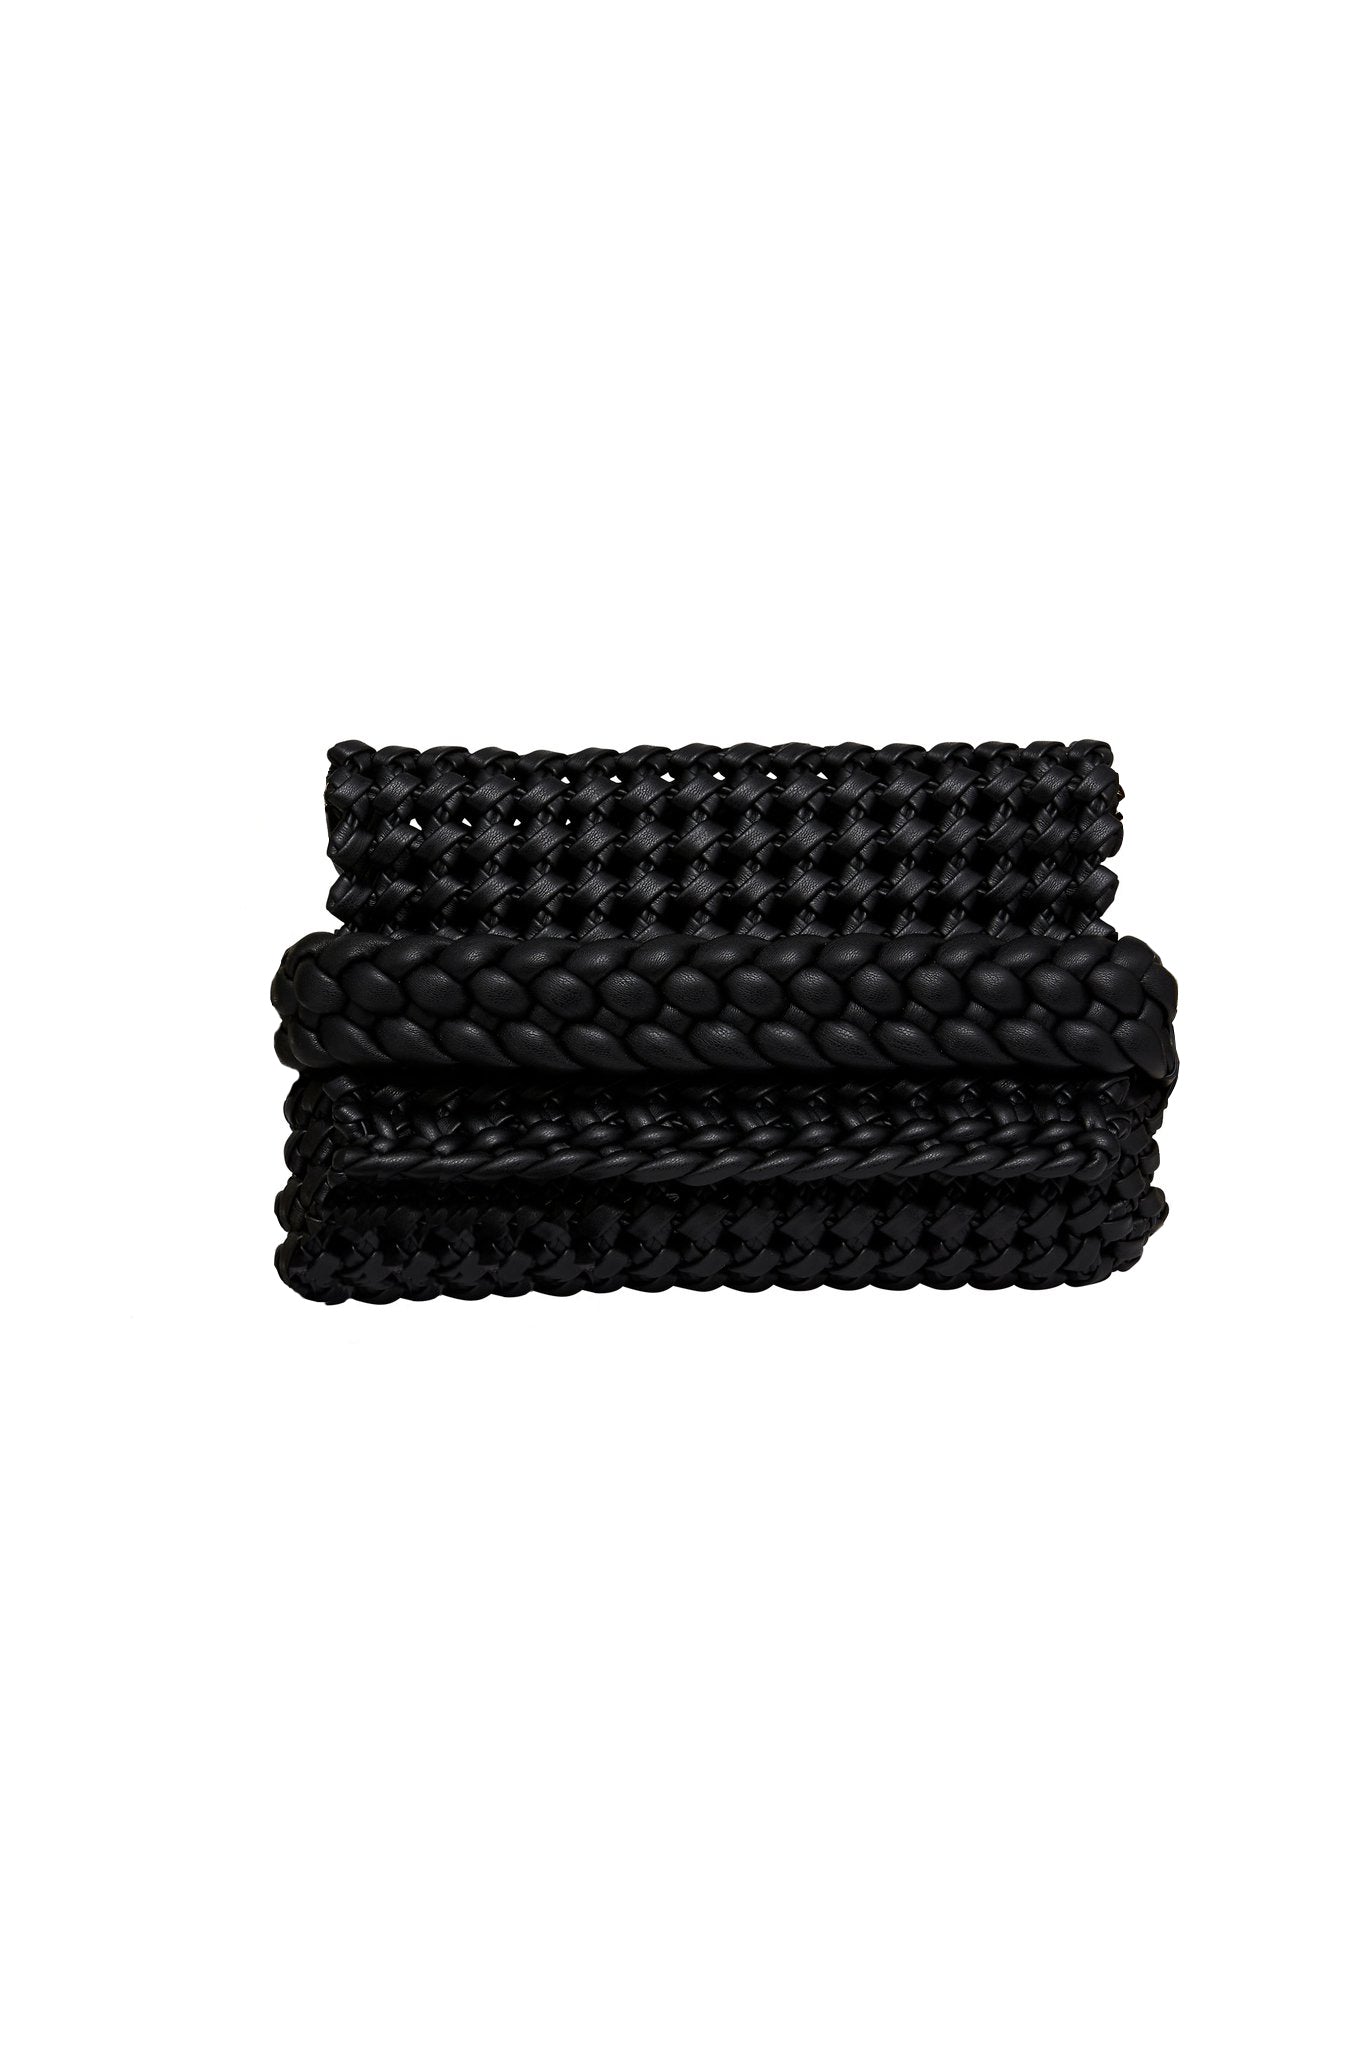 Mirage Woven Chain Clutch, Black